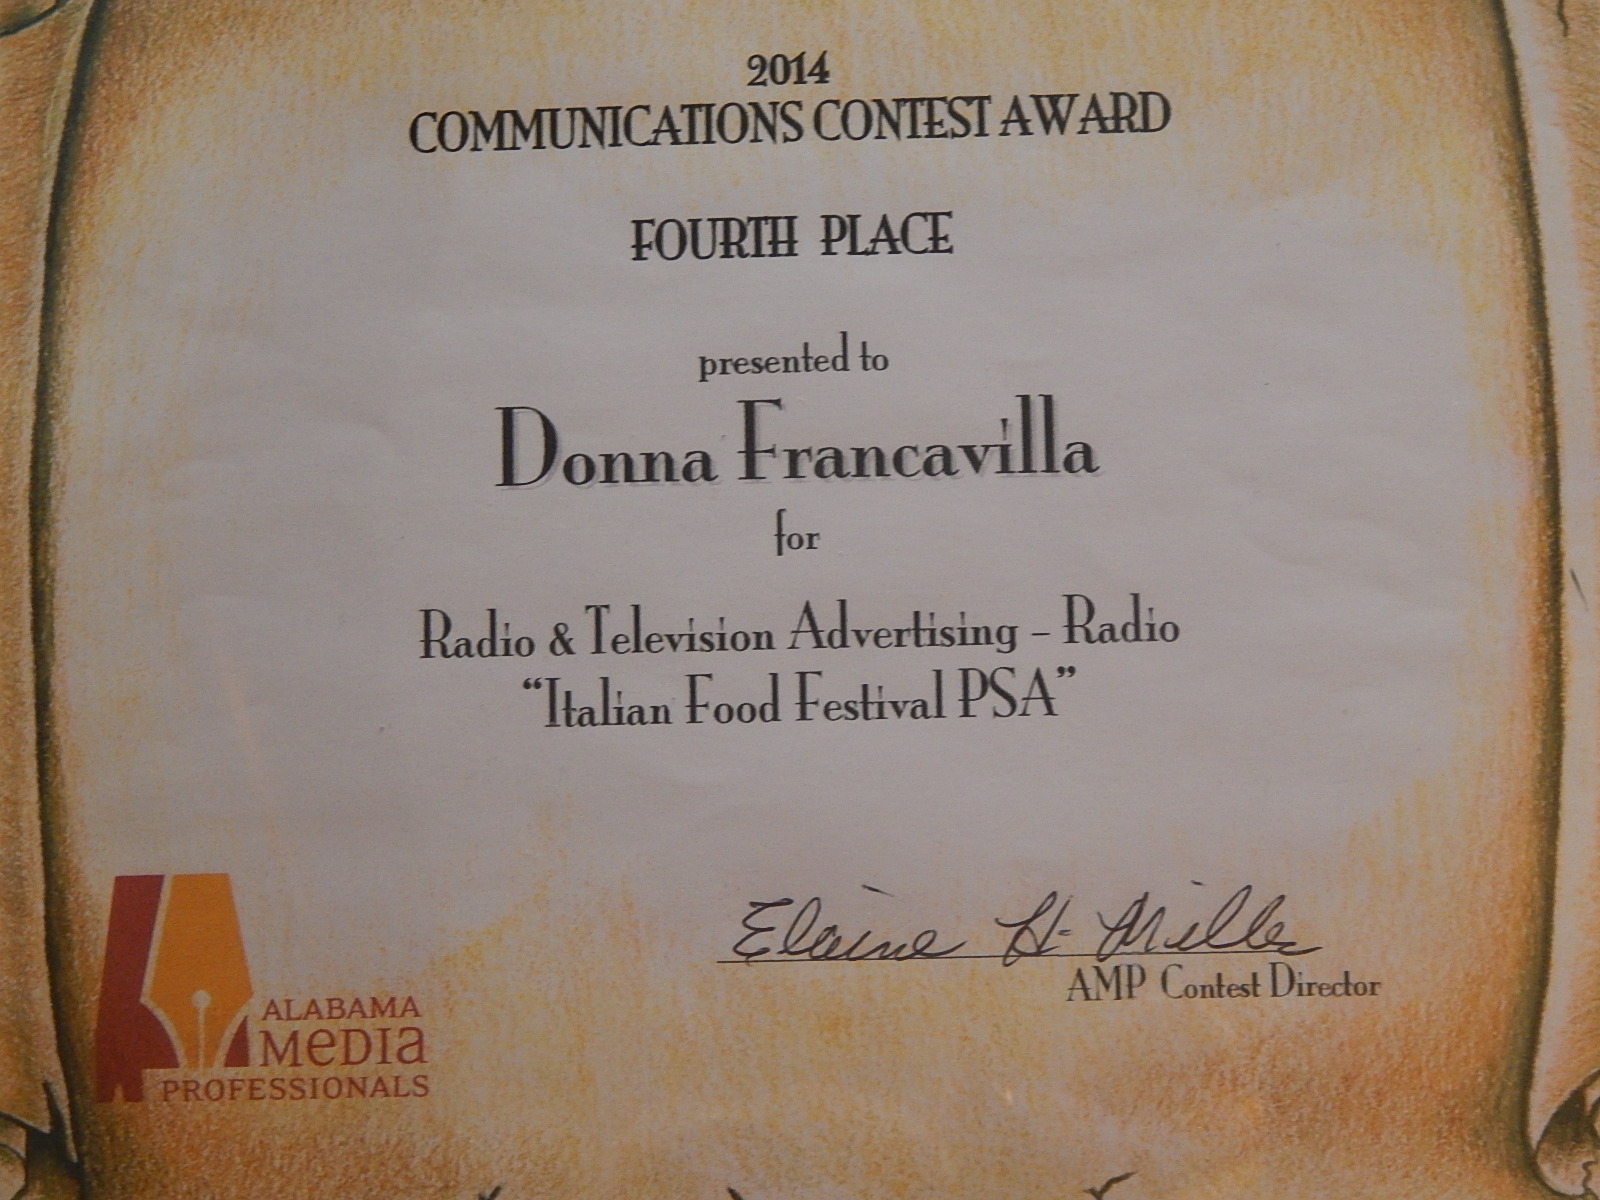 2014 Alabama Media Professionals Communications Contest Award - State Award - Fourth Place presented to Donna Francavilla for Radio & Television Advertising - Radio "Italian Food Festival PSA"